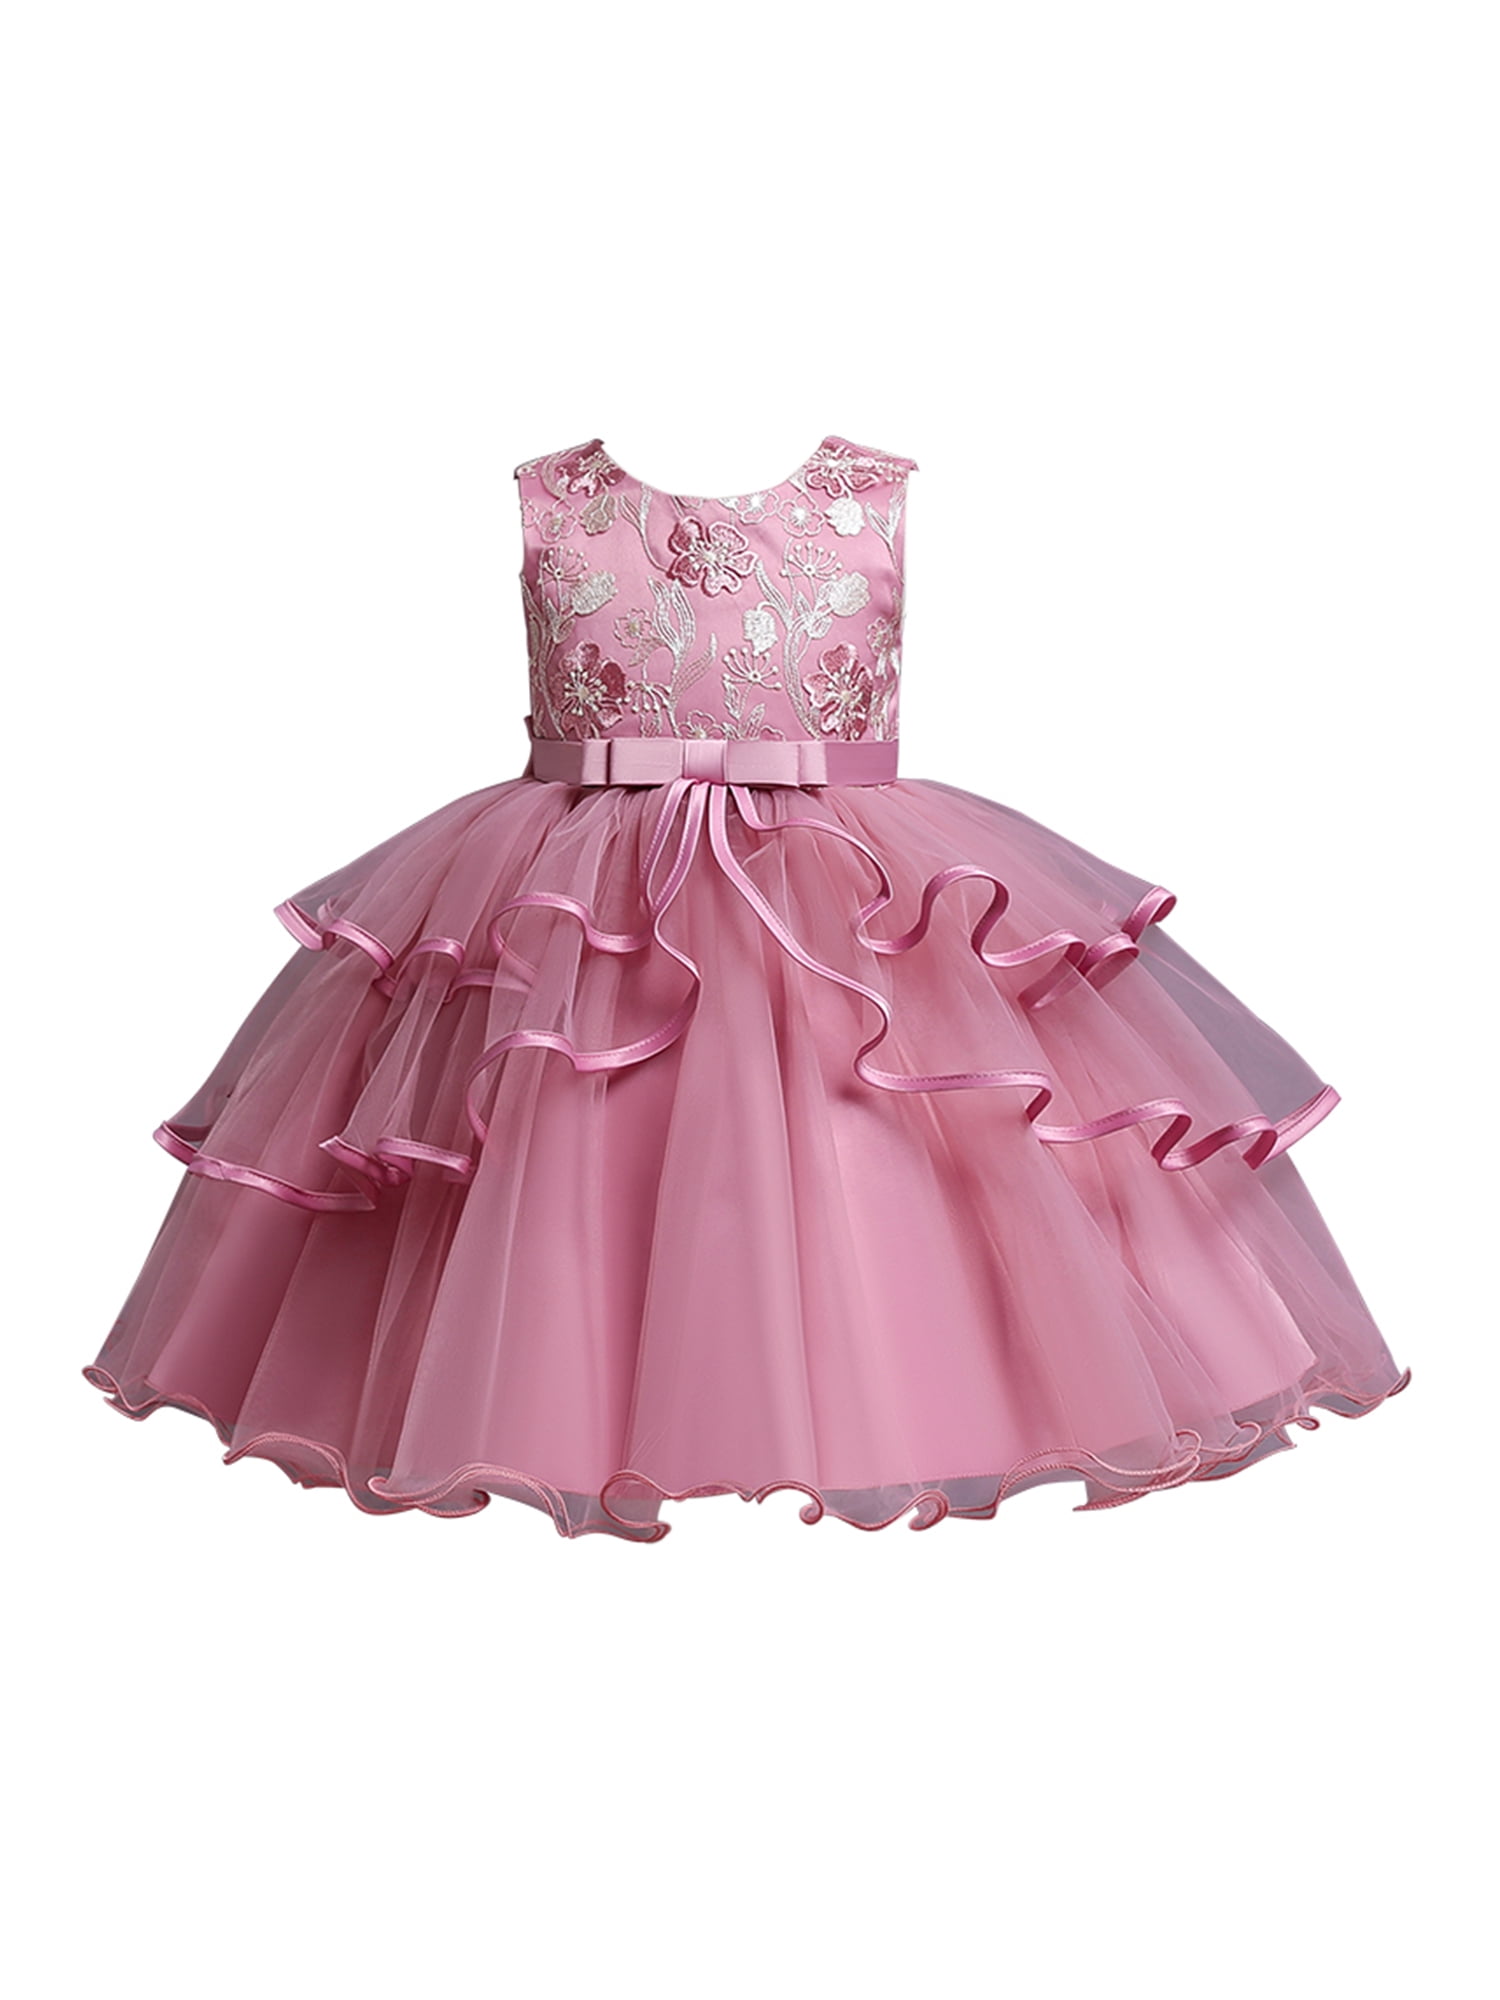 Baby Girl Party Dress Kids Girl Wedding Lace Dress For Child Girl Princess Dress 